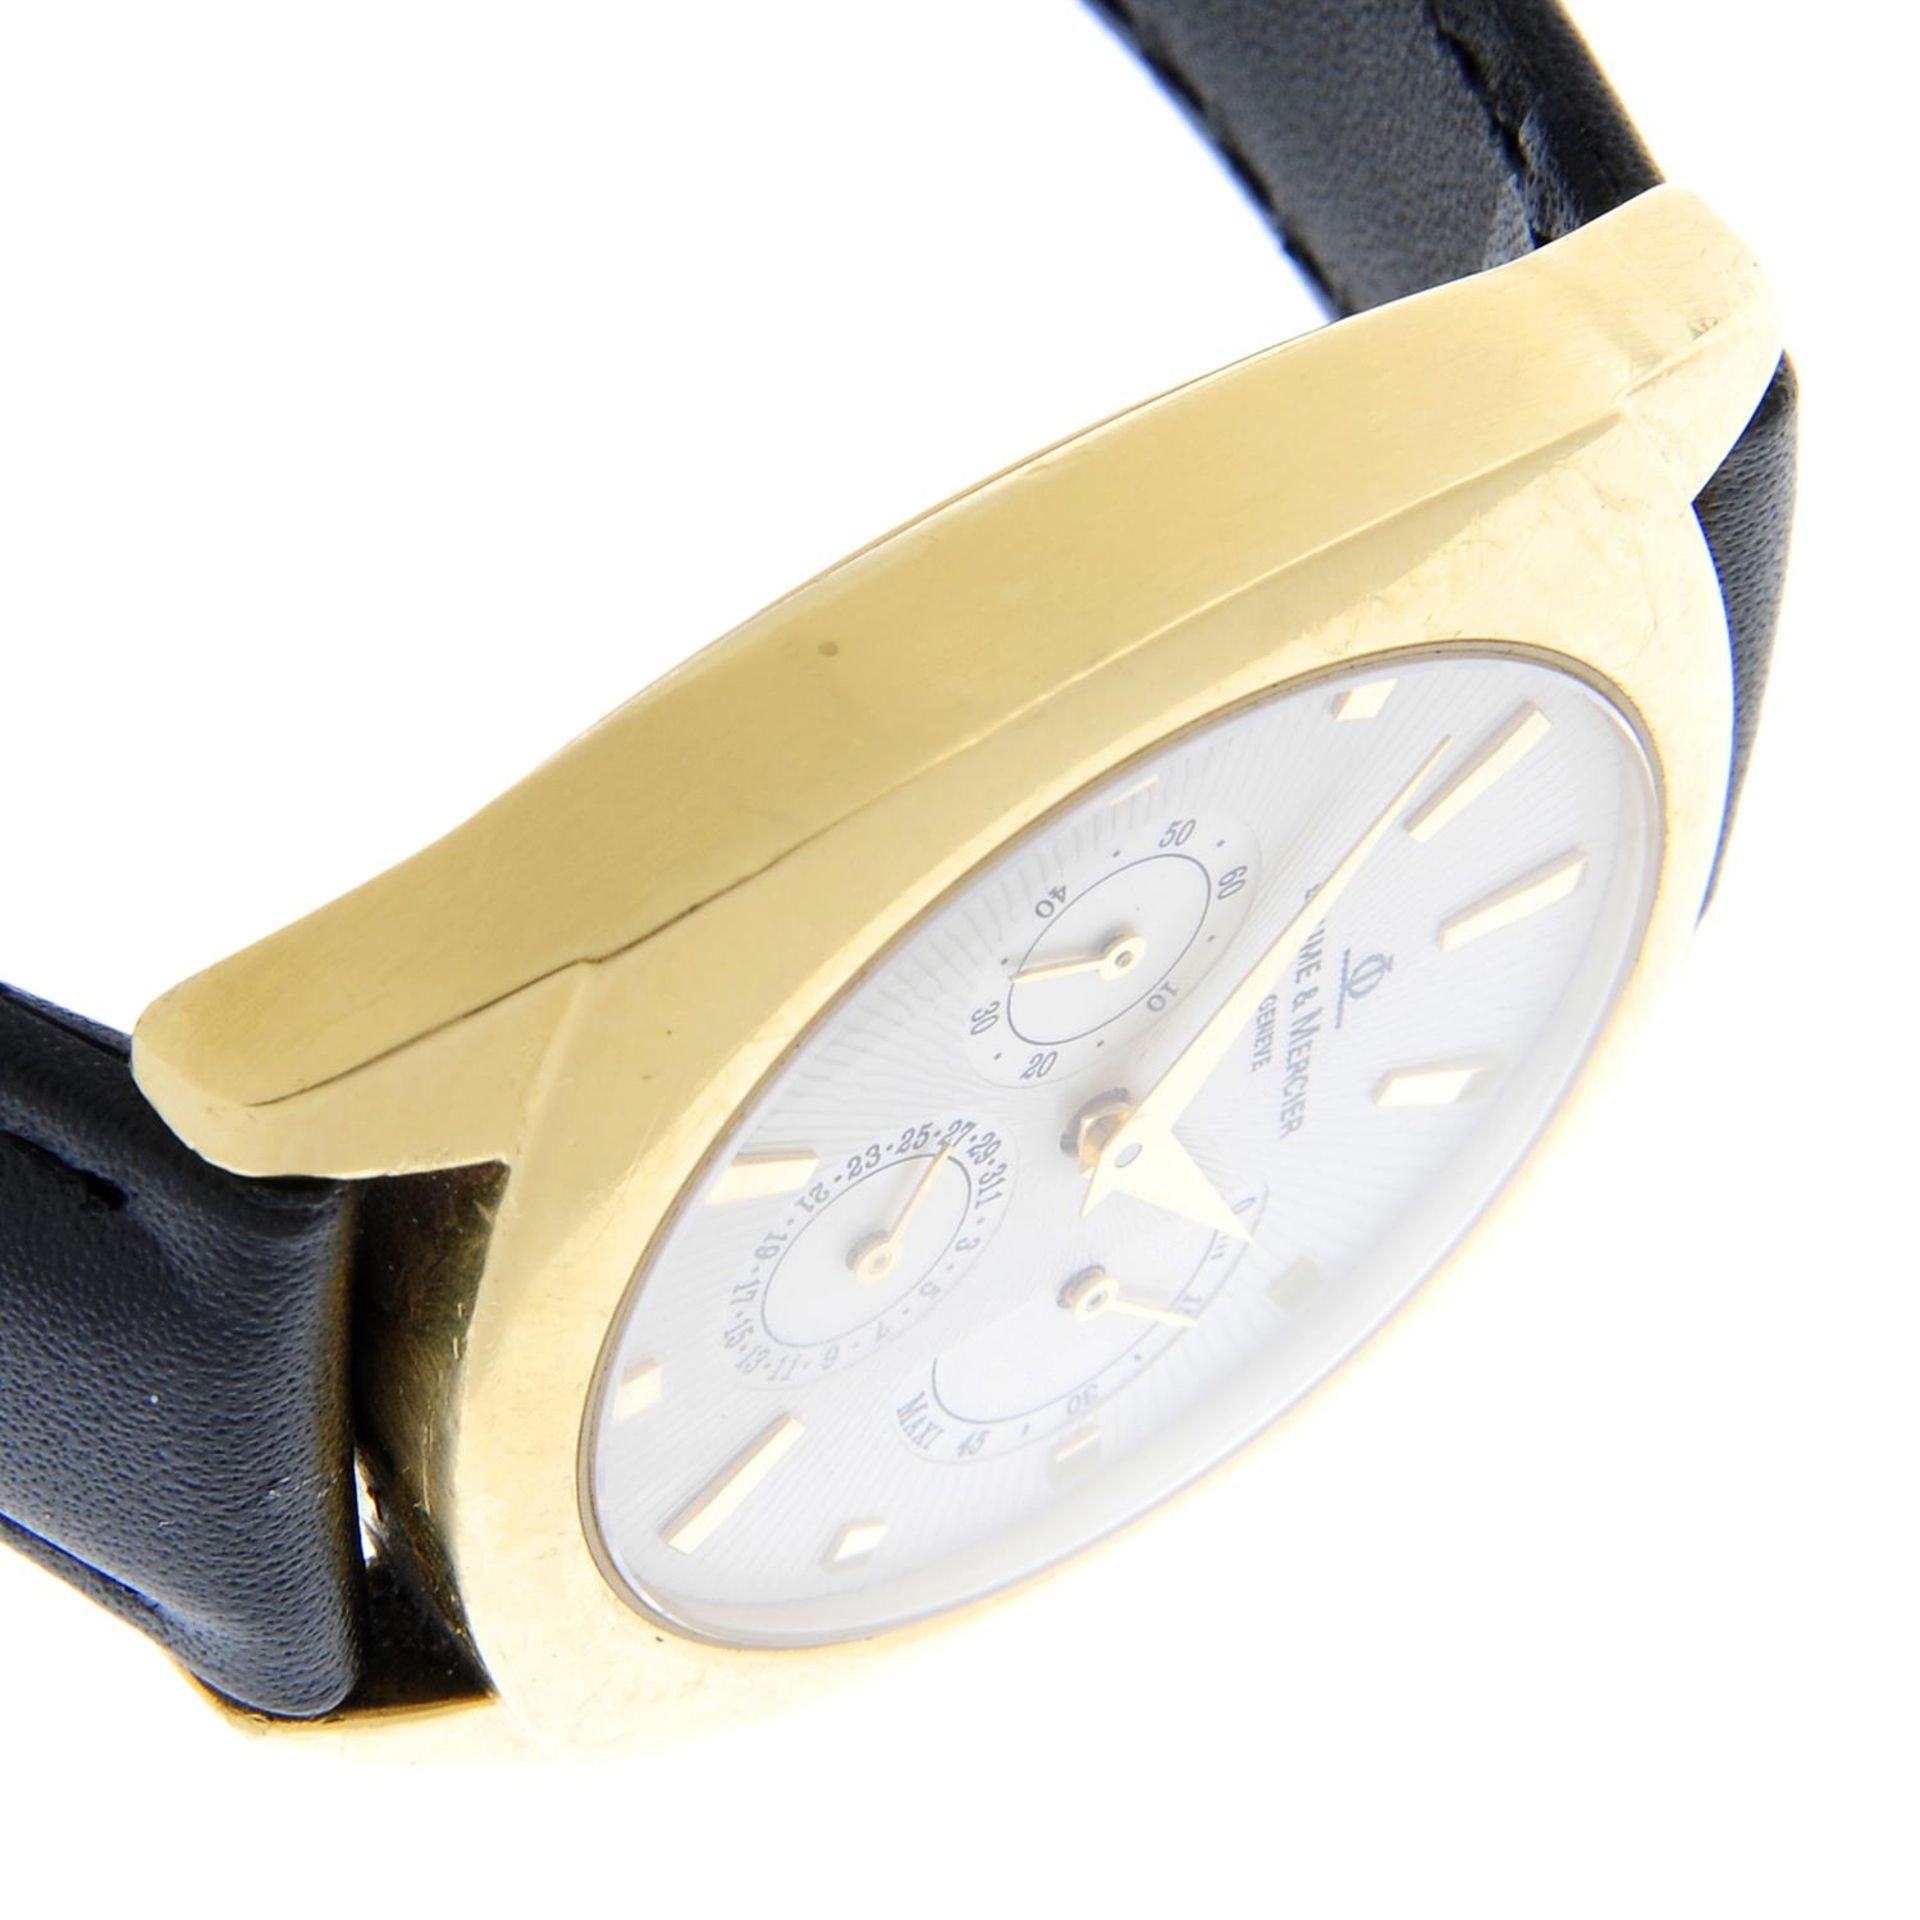 Baume & Mercier - a watch, 33mm. - Image 4 of 6